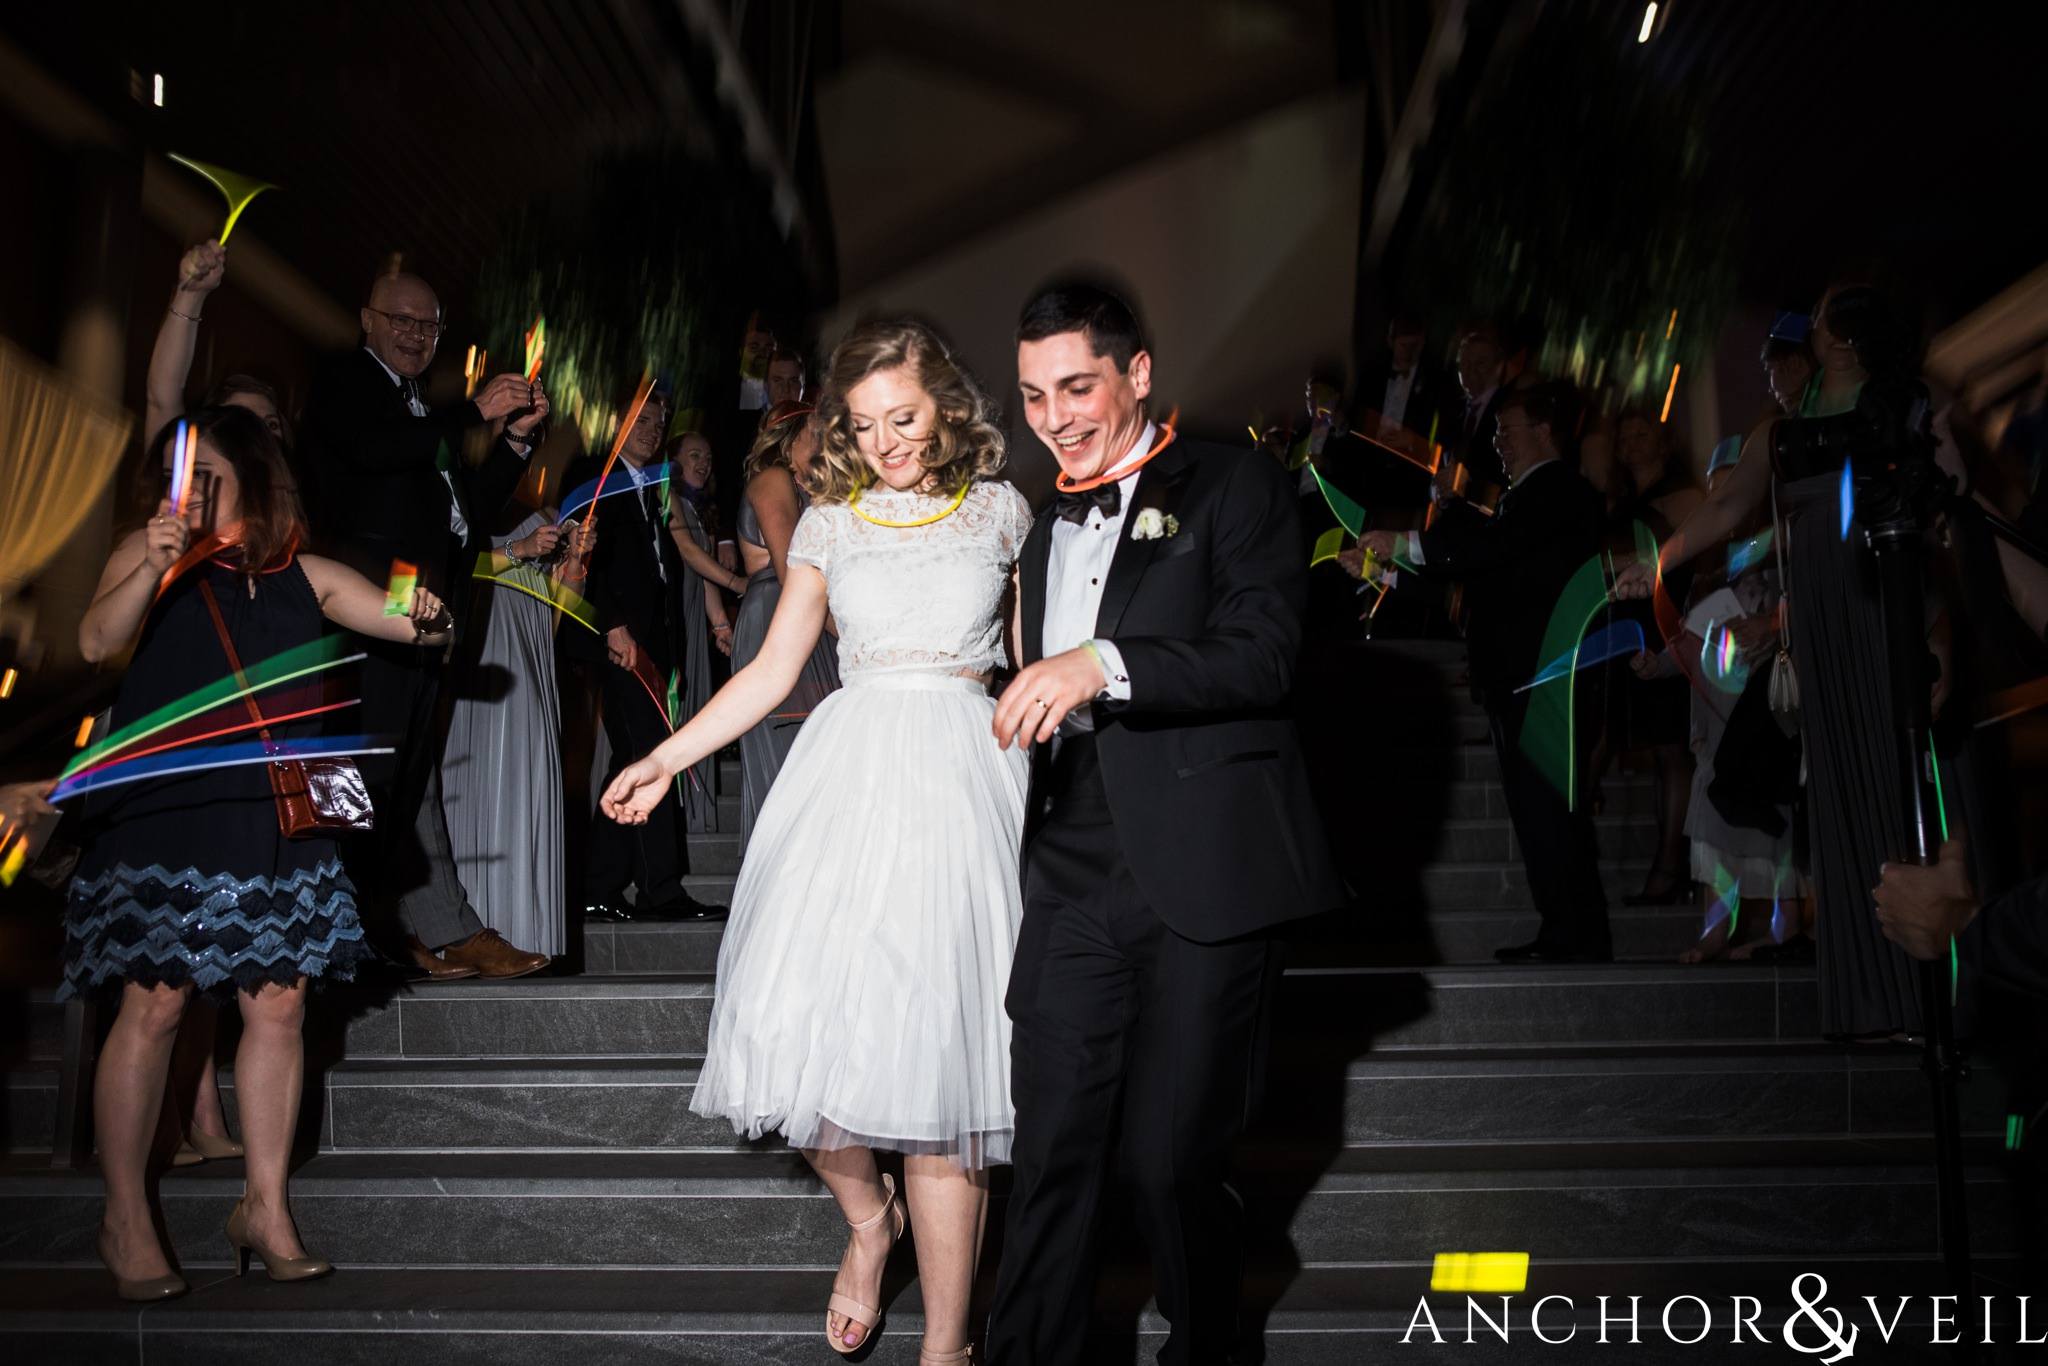 glow stick exit during their ritz Carlton wedding in Uptown Charlotte NC